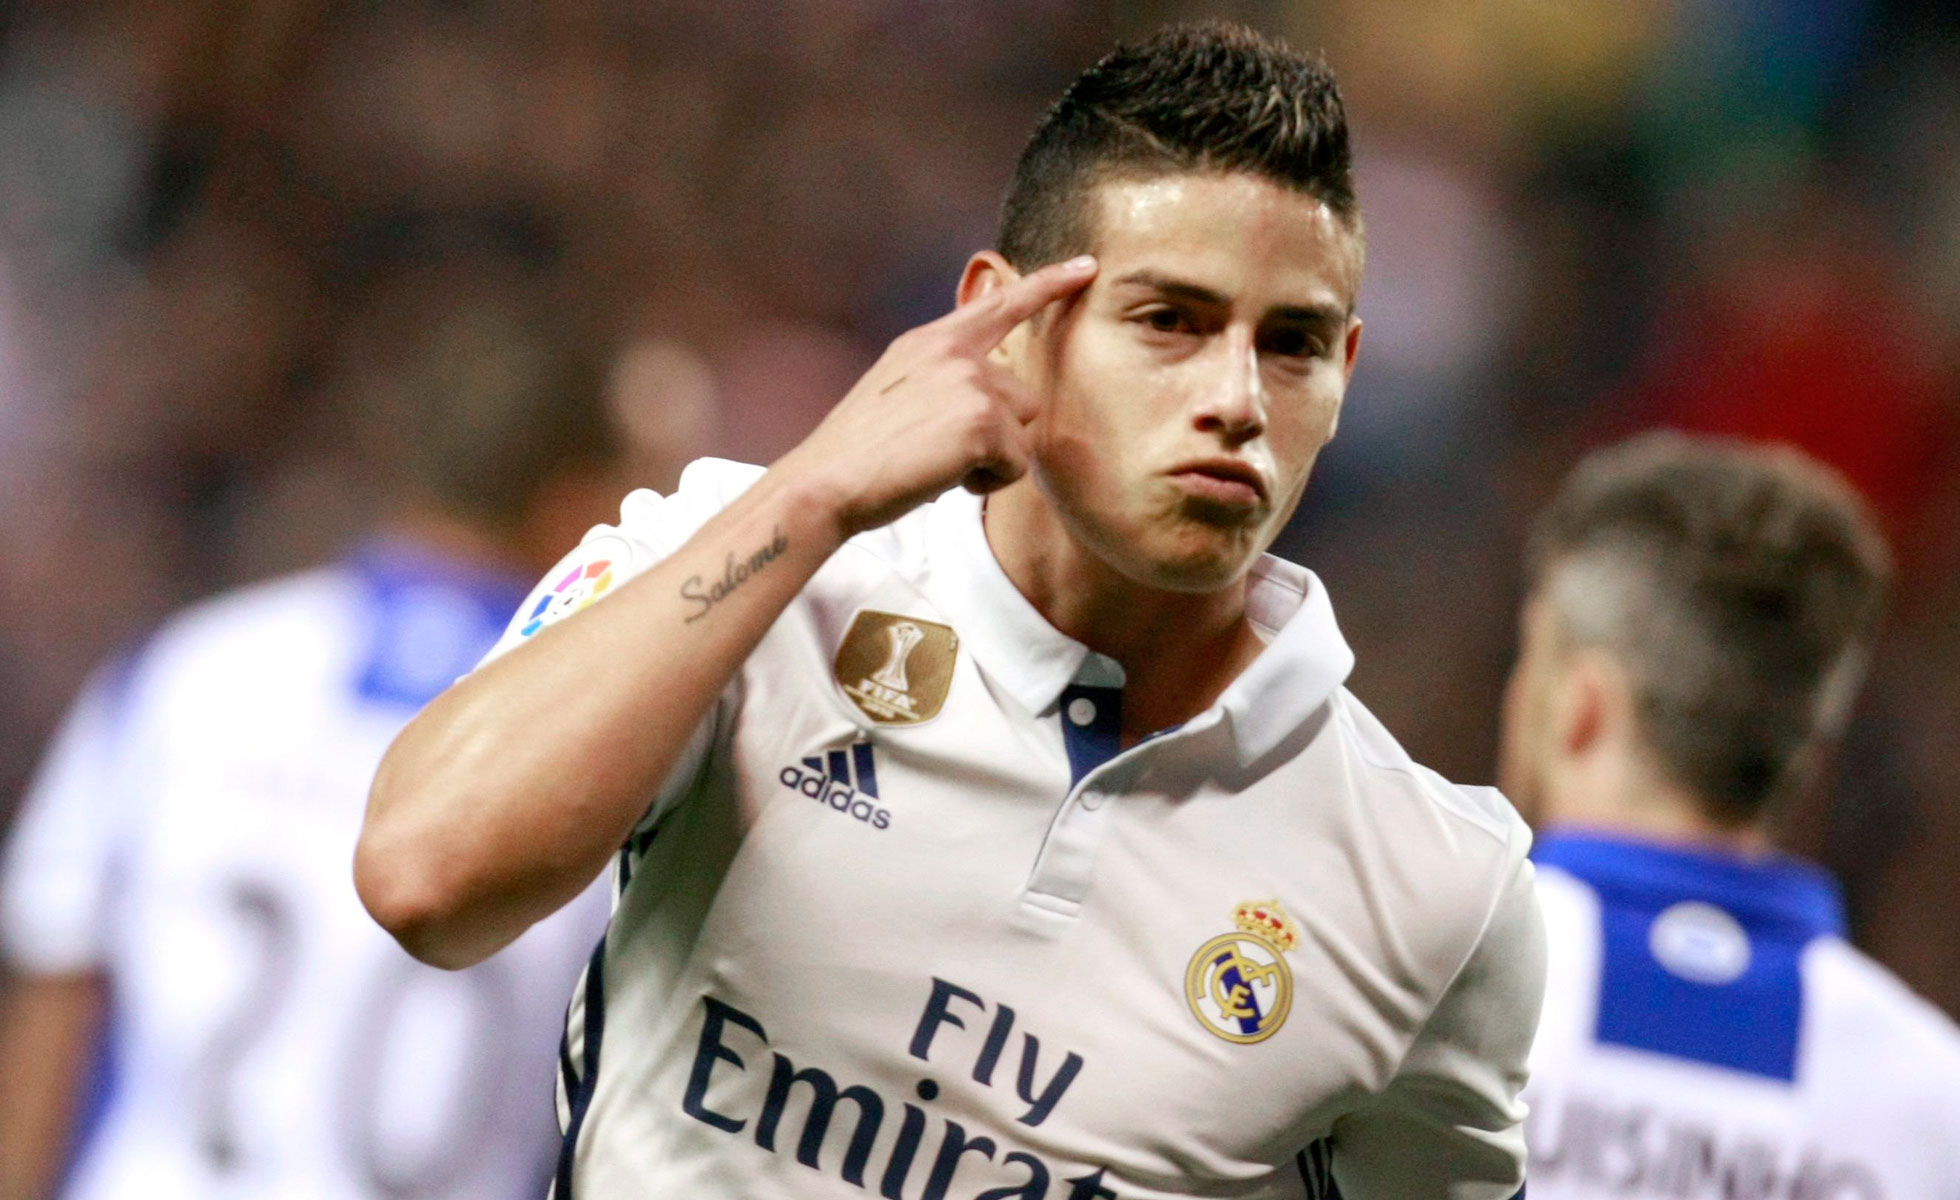 26164327James-Rodriguez-Real-Madrid